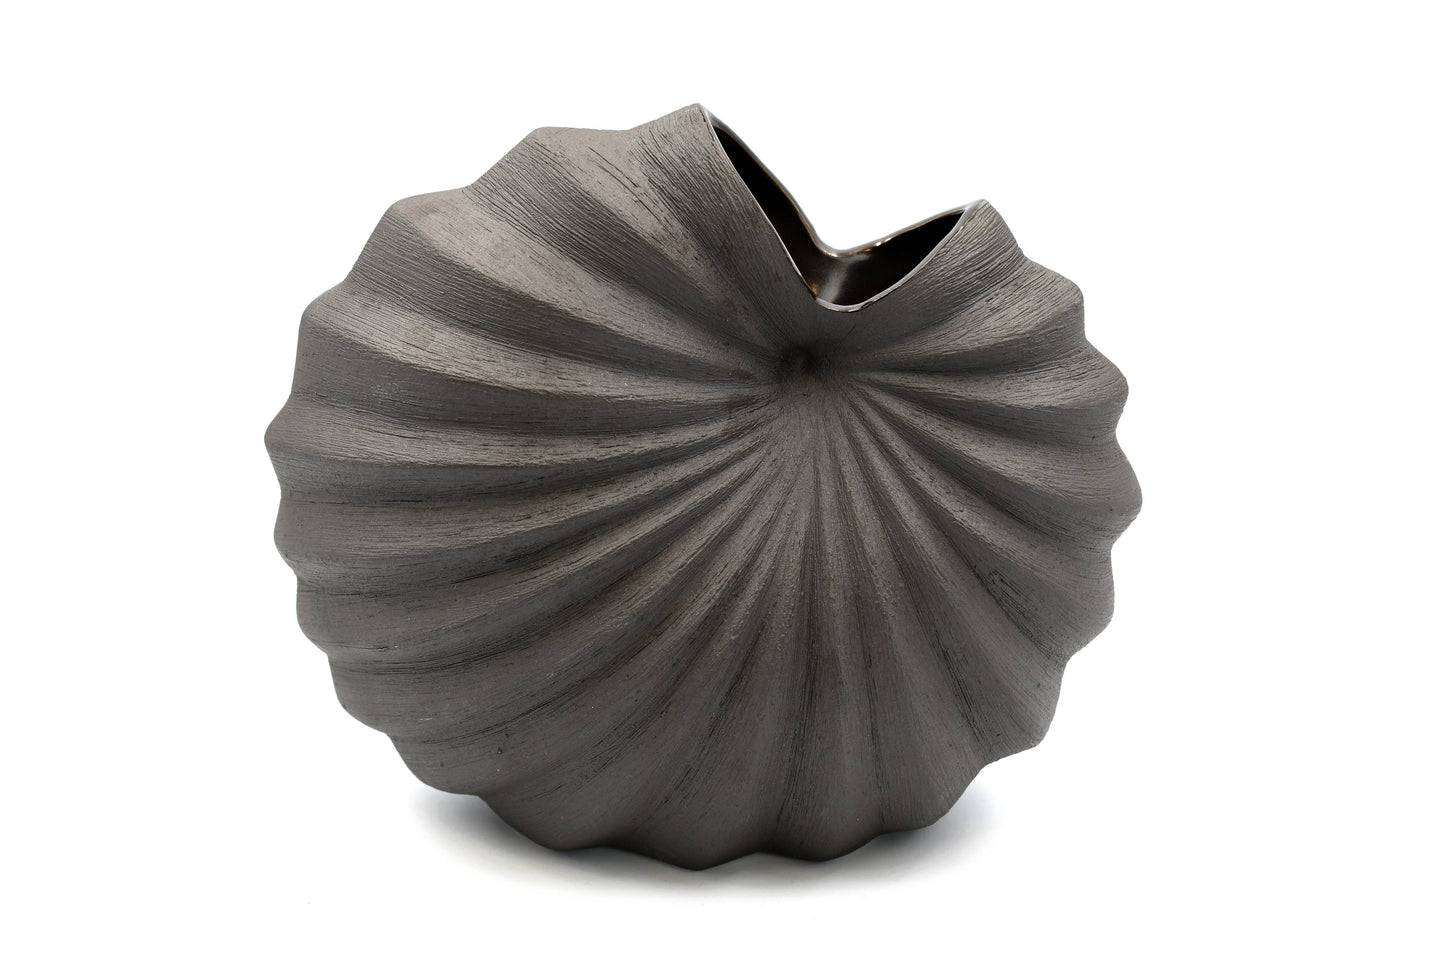 Art Floral Trading LLC - Small Palm Porcelain Ceramic Bud Vase - Black